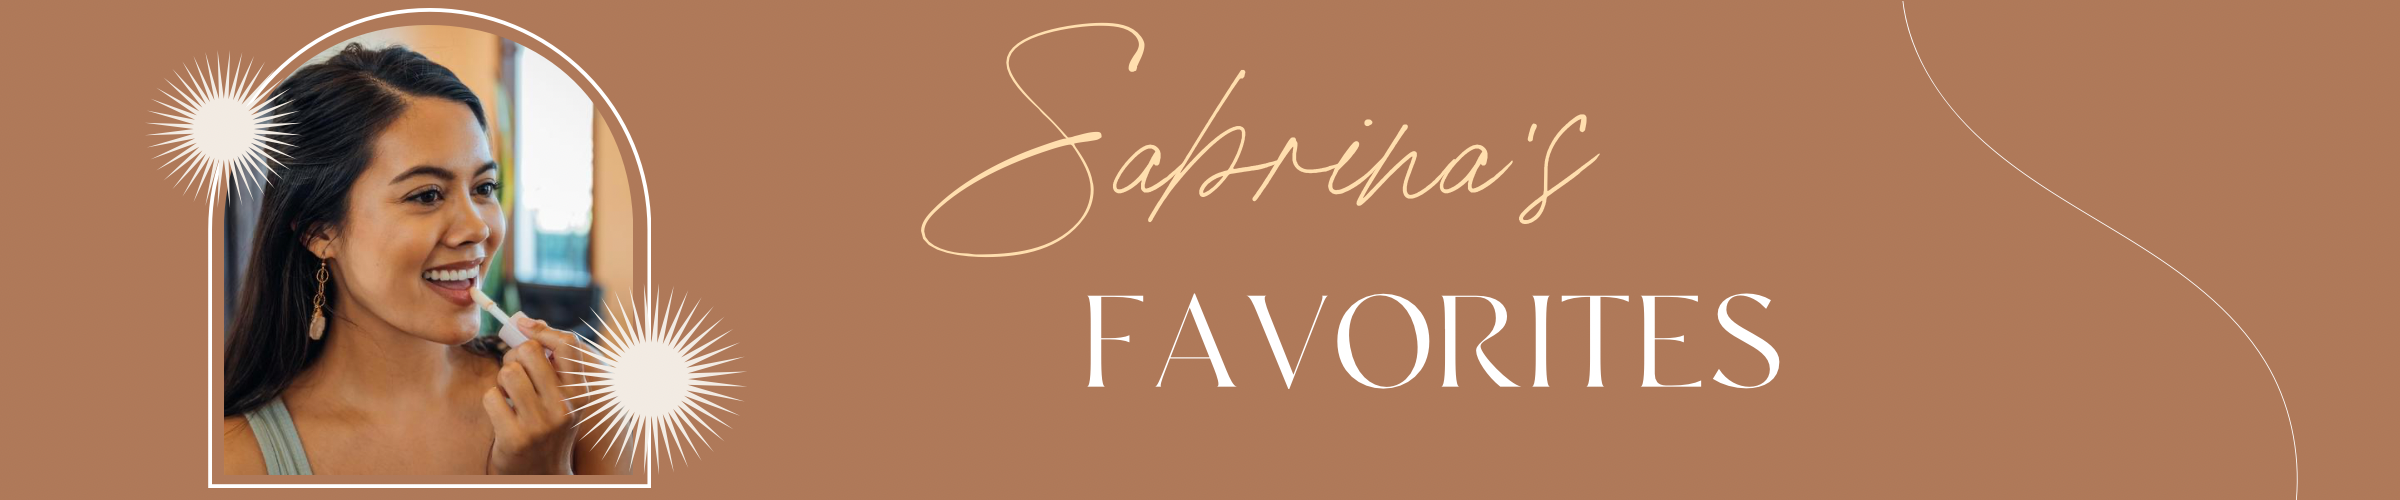 Sabrina’s Favorites